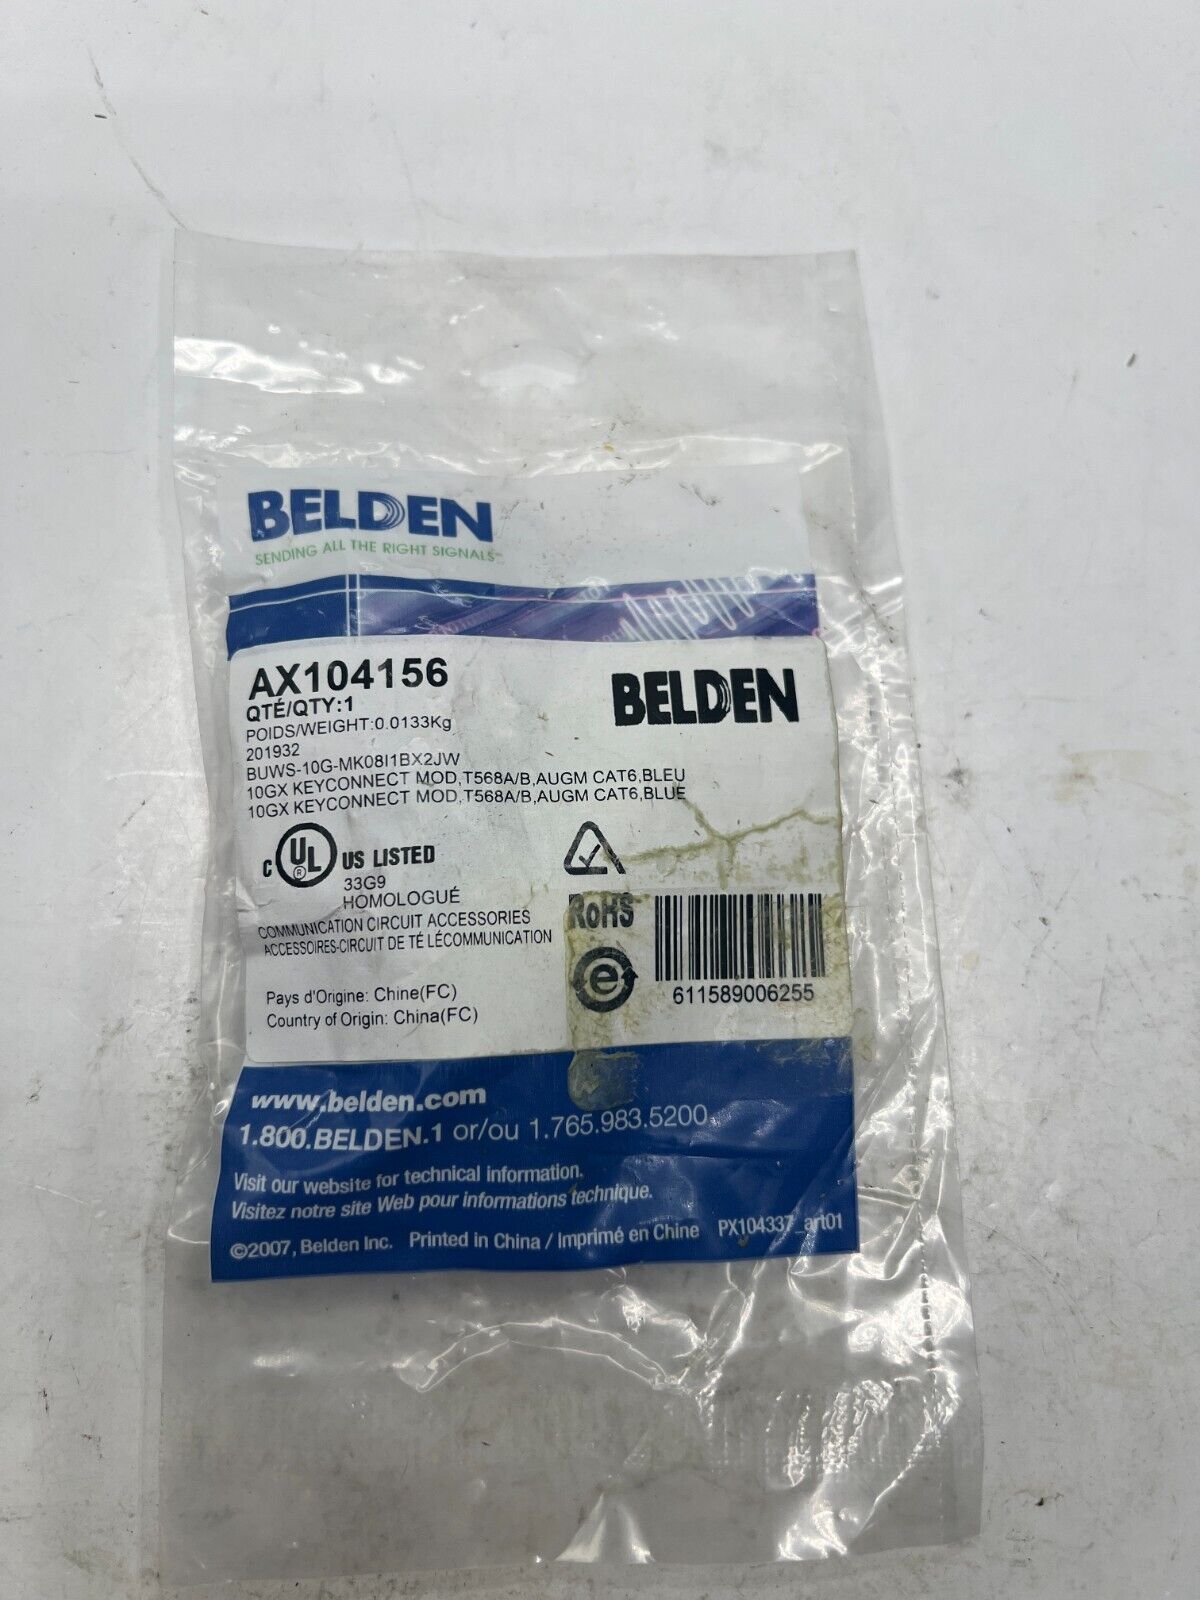 1 GENUINE Belden AX104156 KeyConnect 10GX CAT6A RJ45 Modular Jack, T568A/B, Blue